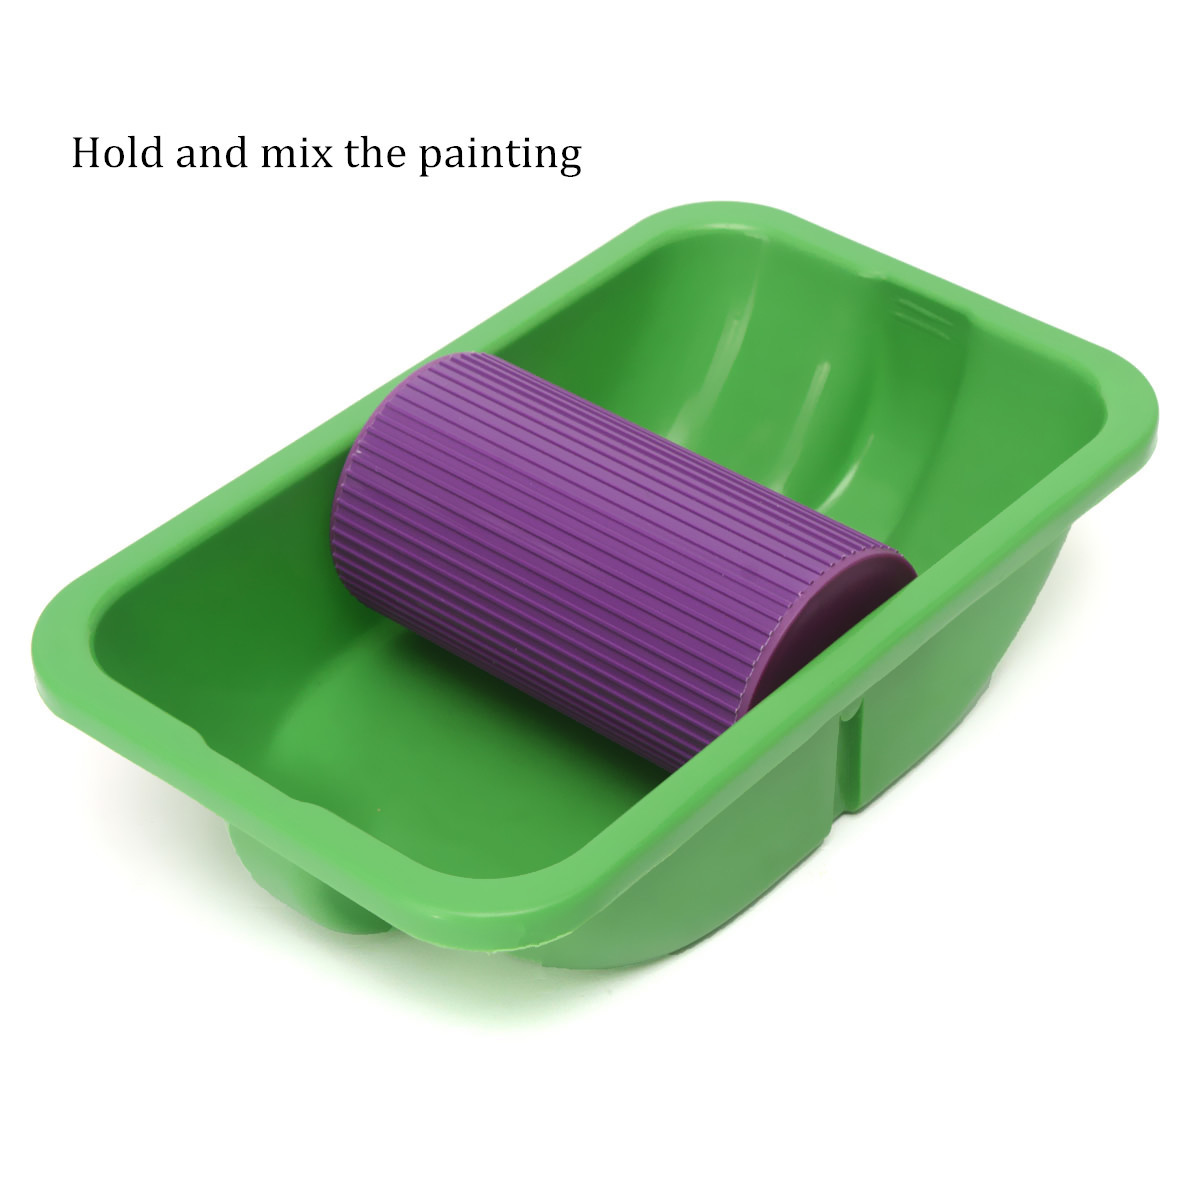 DIY-Home-Painting-Pad-Kit-Roller-Brush-Tray-Paint-Rollers-Kit-Painting-Roller-Tray-Brush-1304775-2